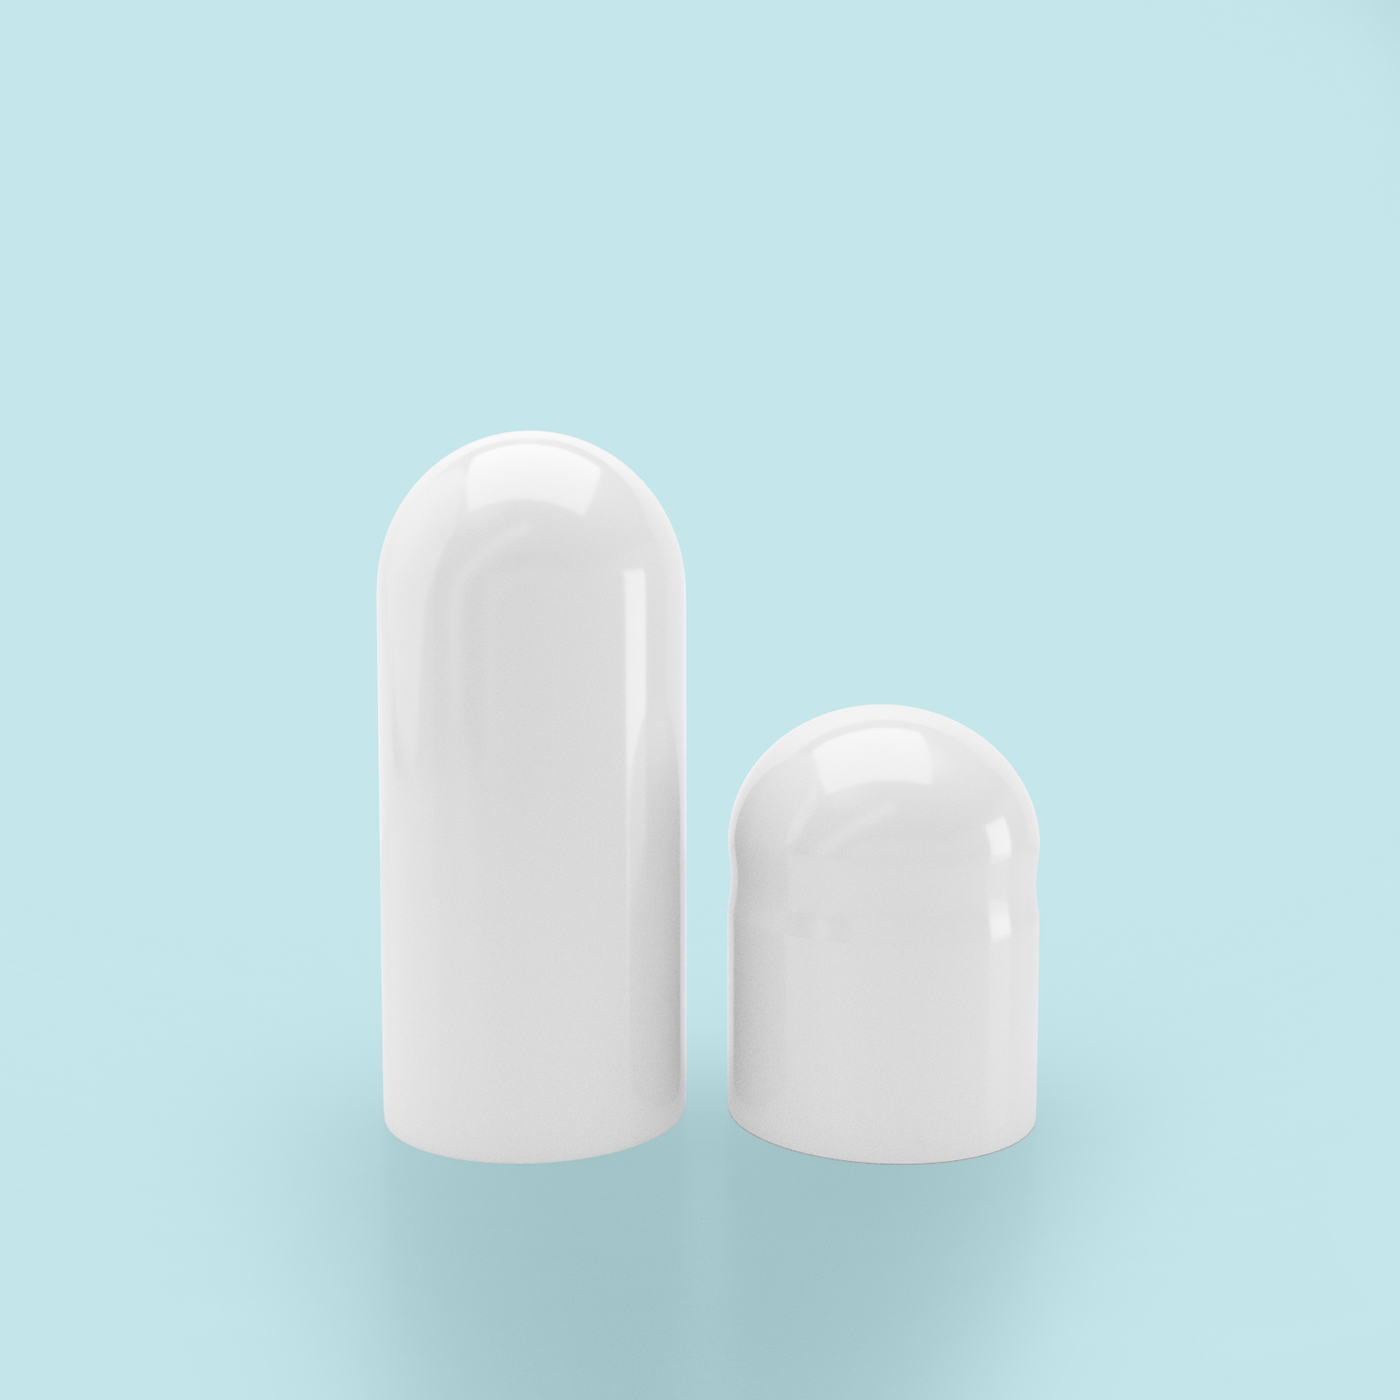 Colored Vegetarian Acid Resistant Enteric Empty Capsules Size 00 White/White (Box of 75,000) - White